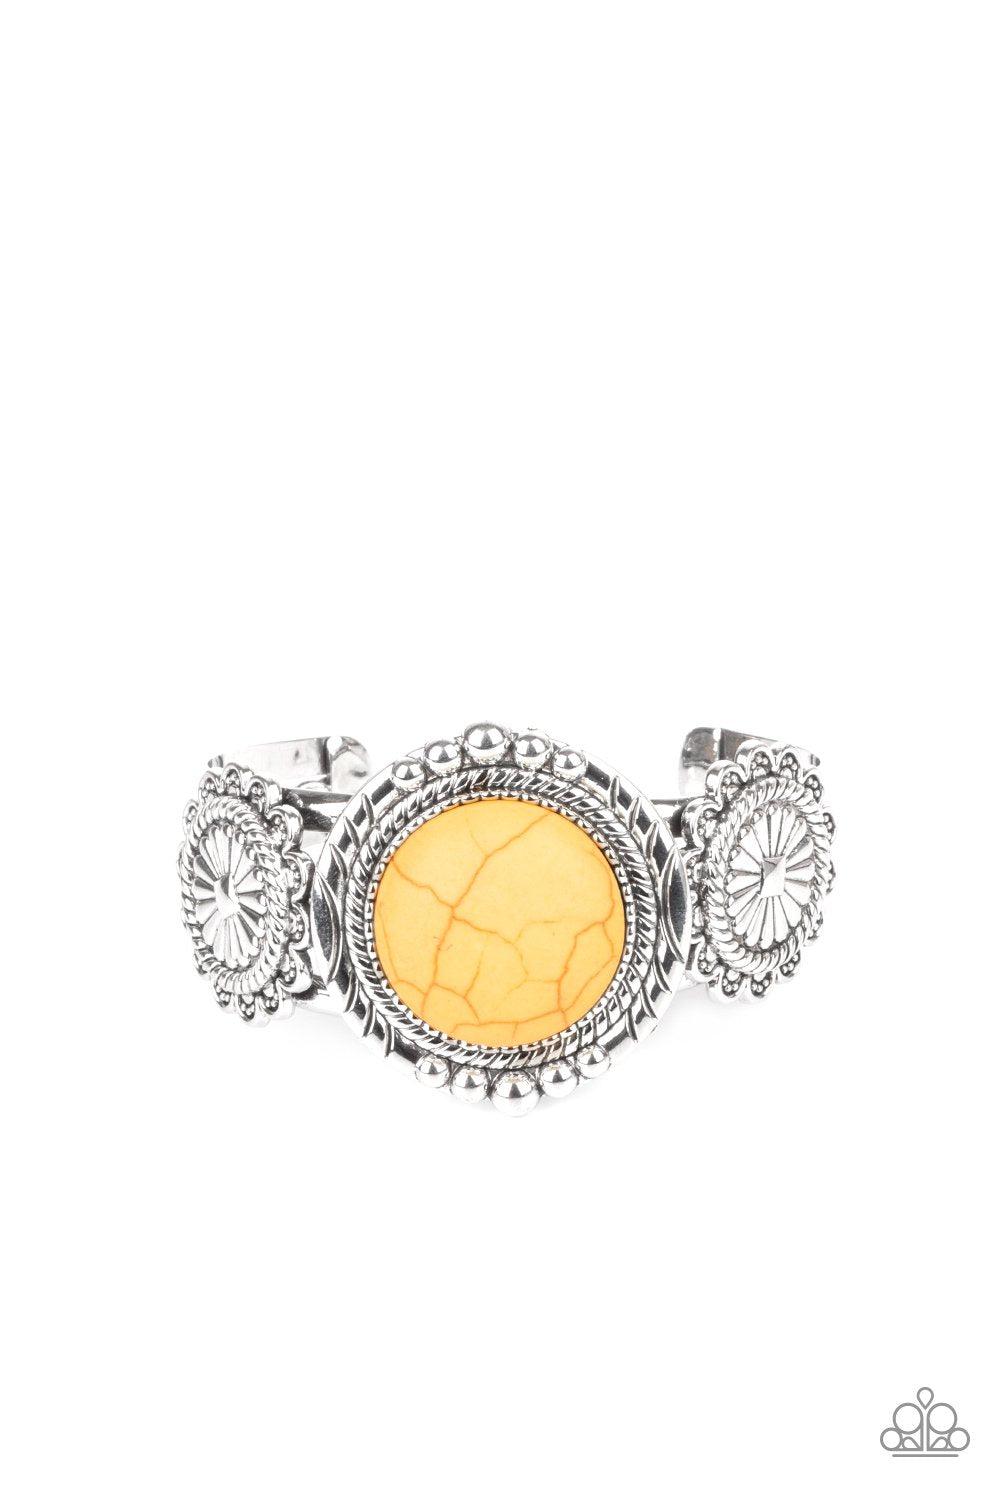 Mojave Motif Yellow Stone Cuff Bracelet - Paparazzi Accessories- lightbox - CarasShop.com - $5 Jewelry by Cara Jewels